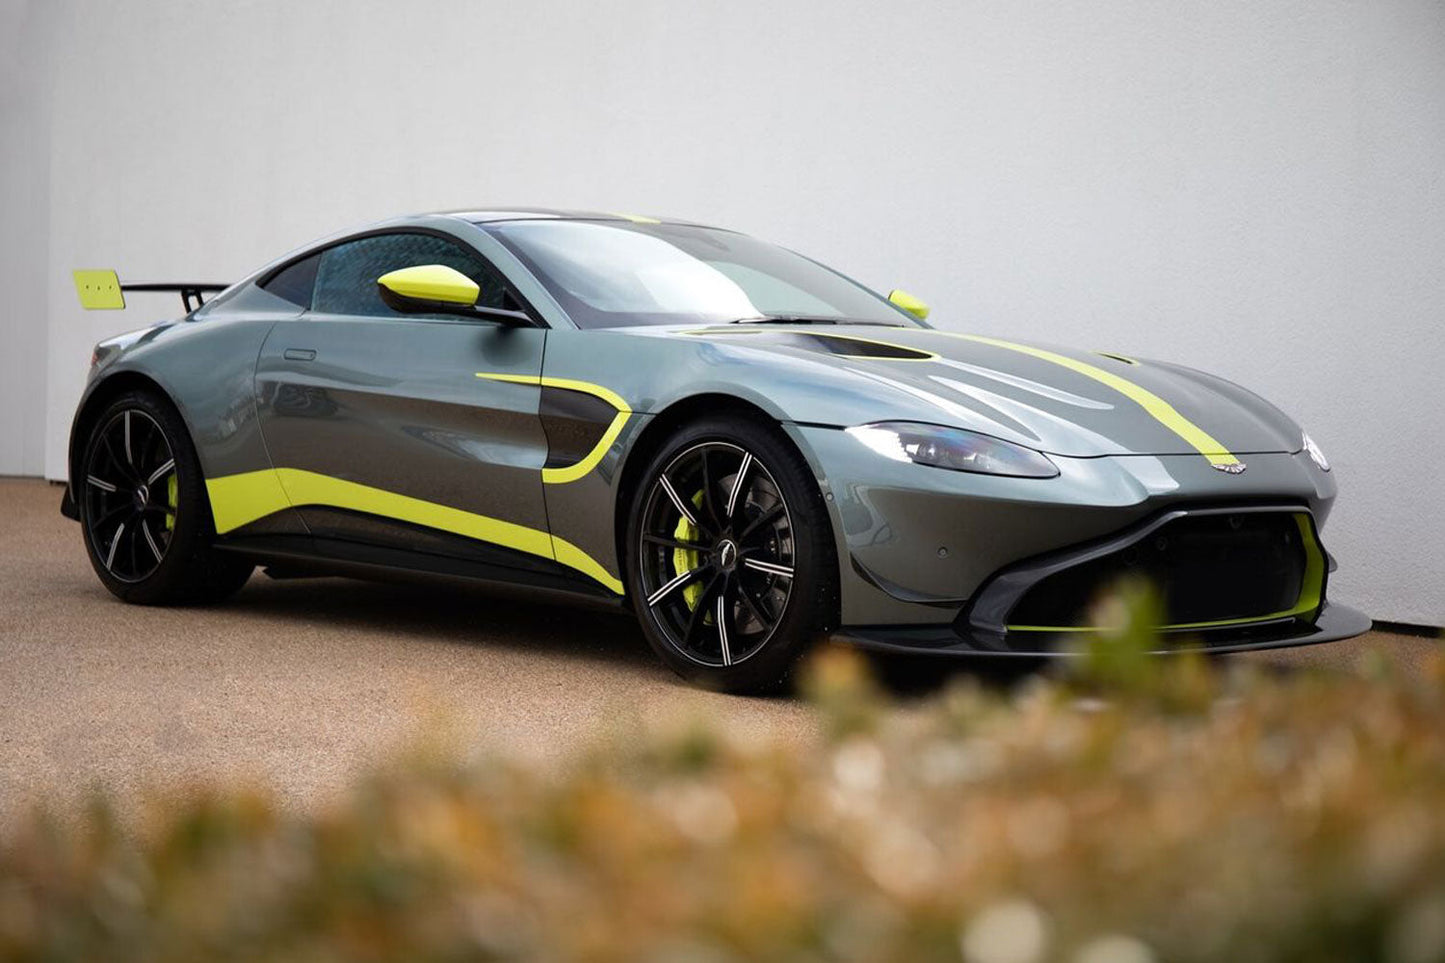 Aston Martin Vantage Sport Exhaust with Sound Architect™ (2018 on) - QuickSilver Exhausts